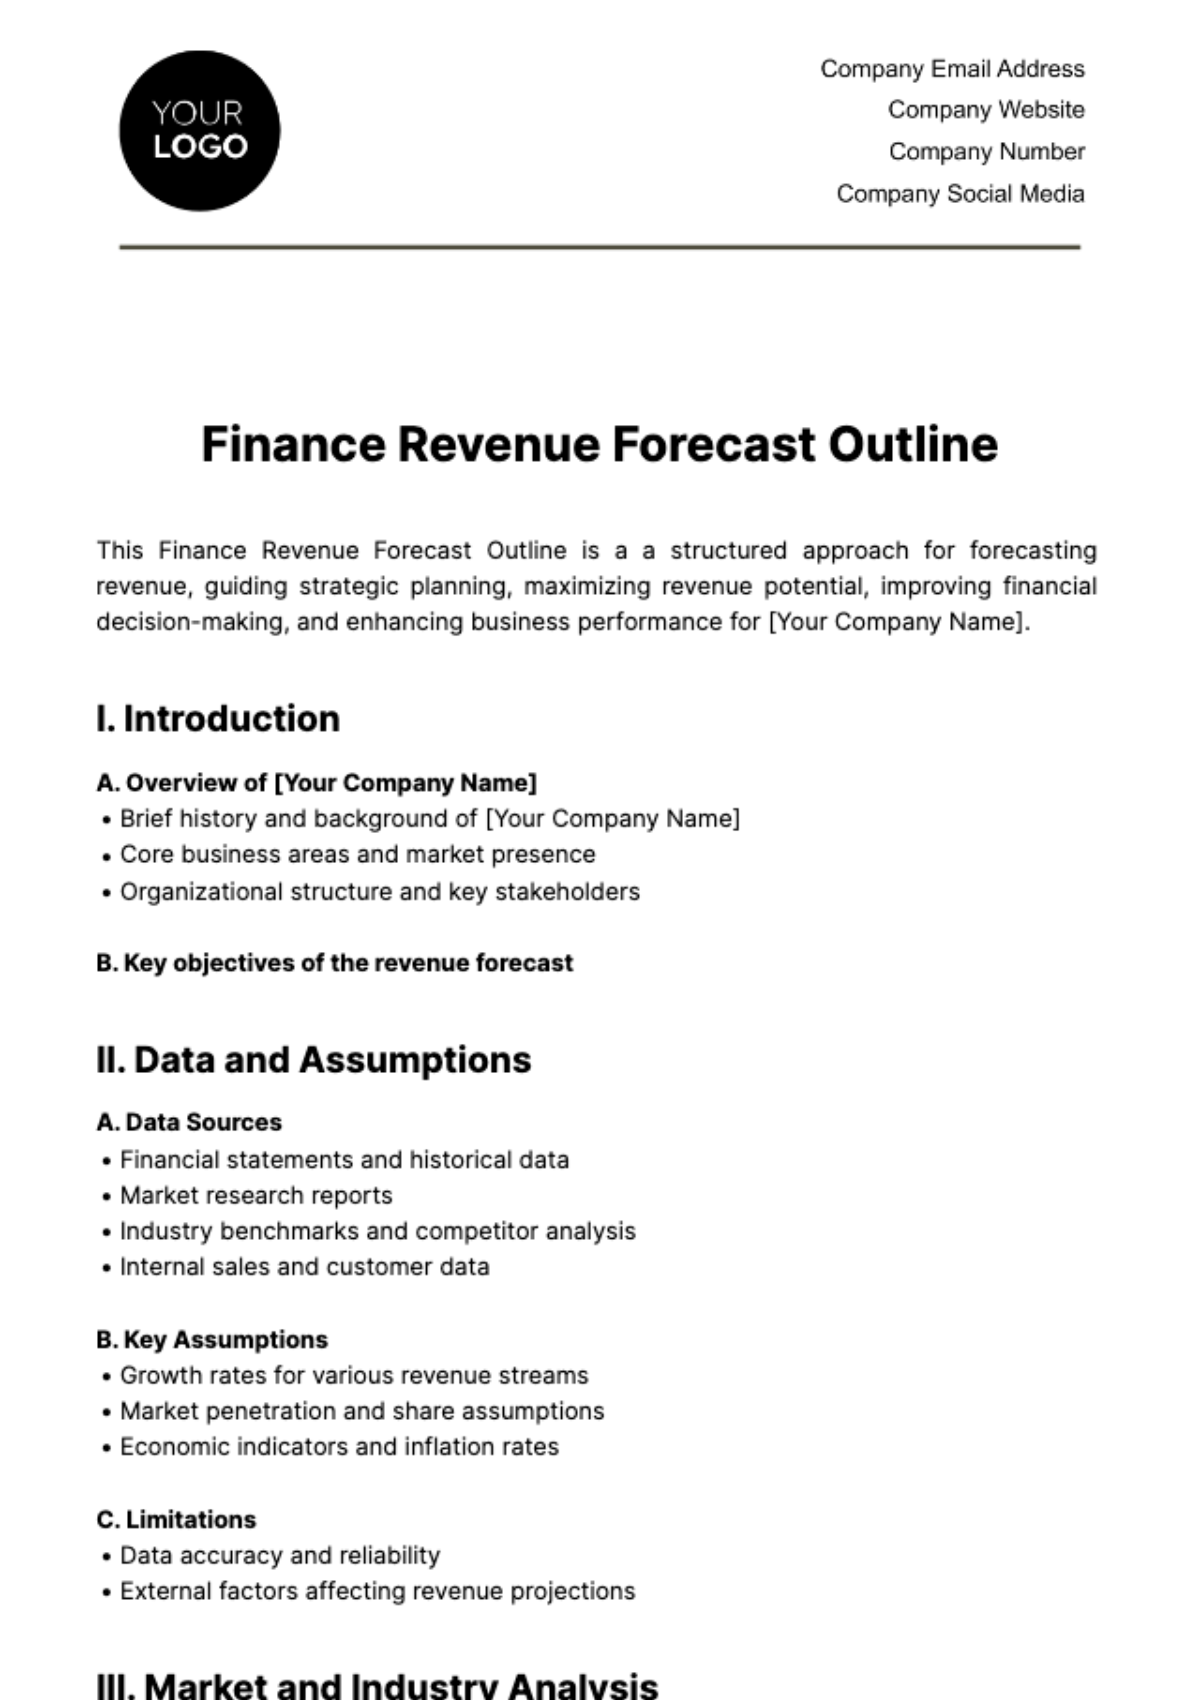 Free Finance Revenue Forecast Outline Template